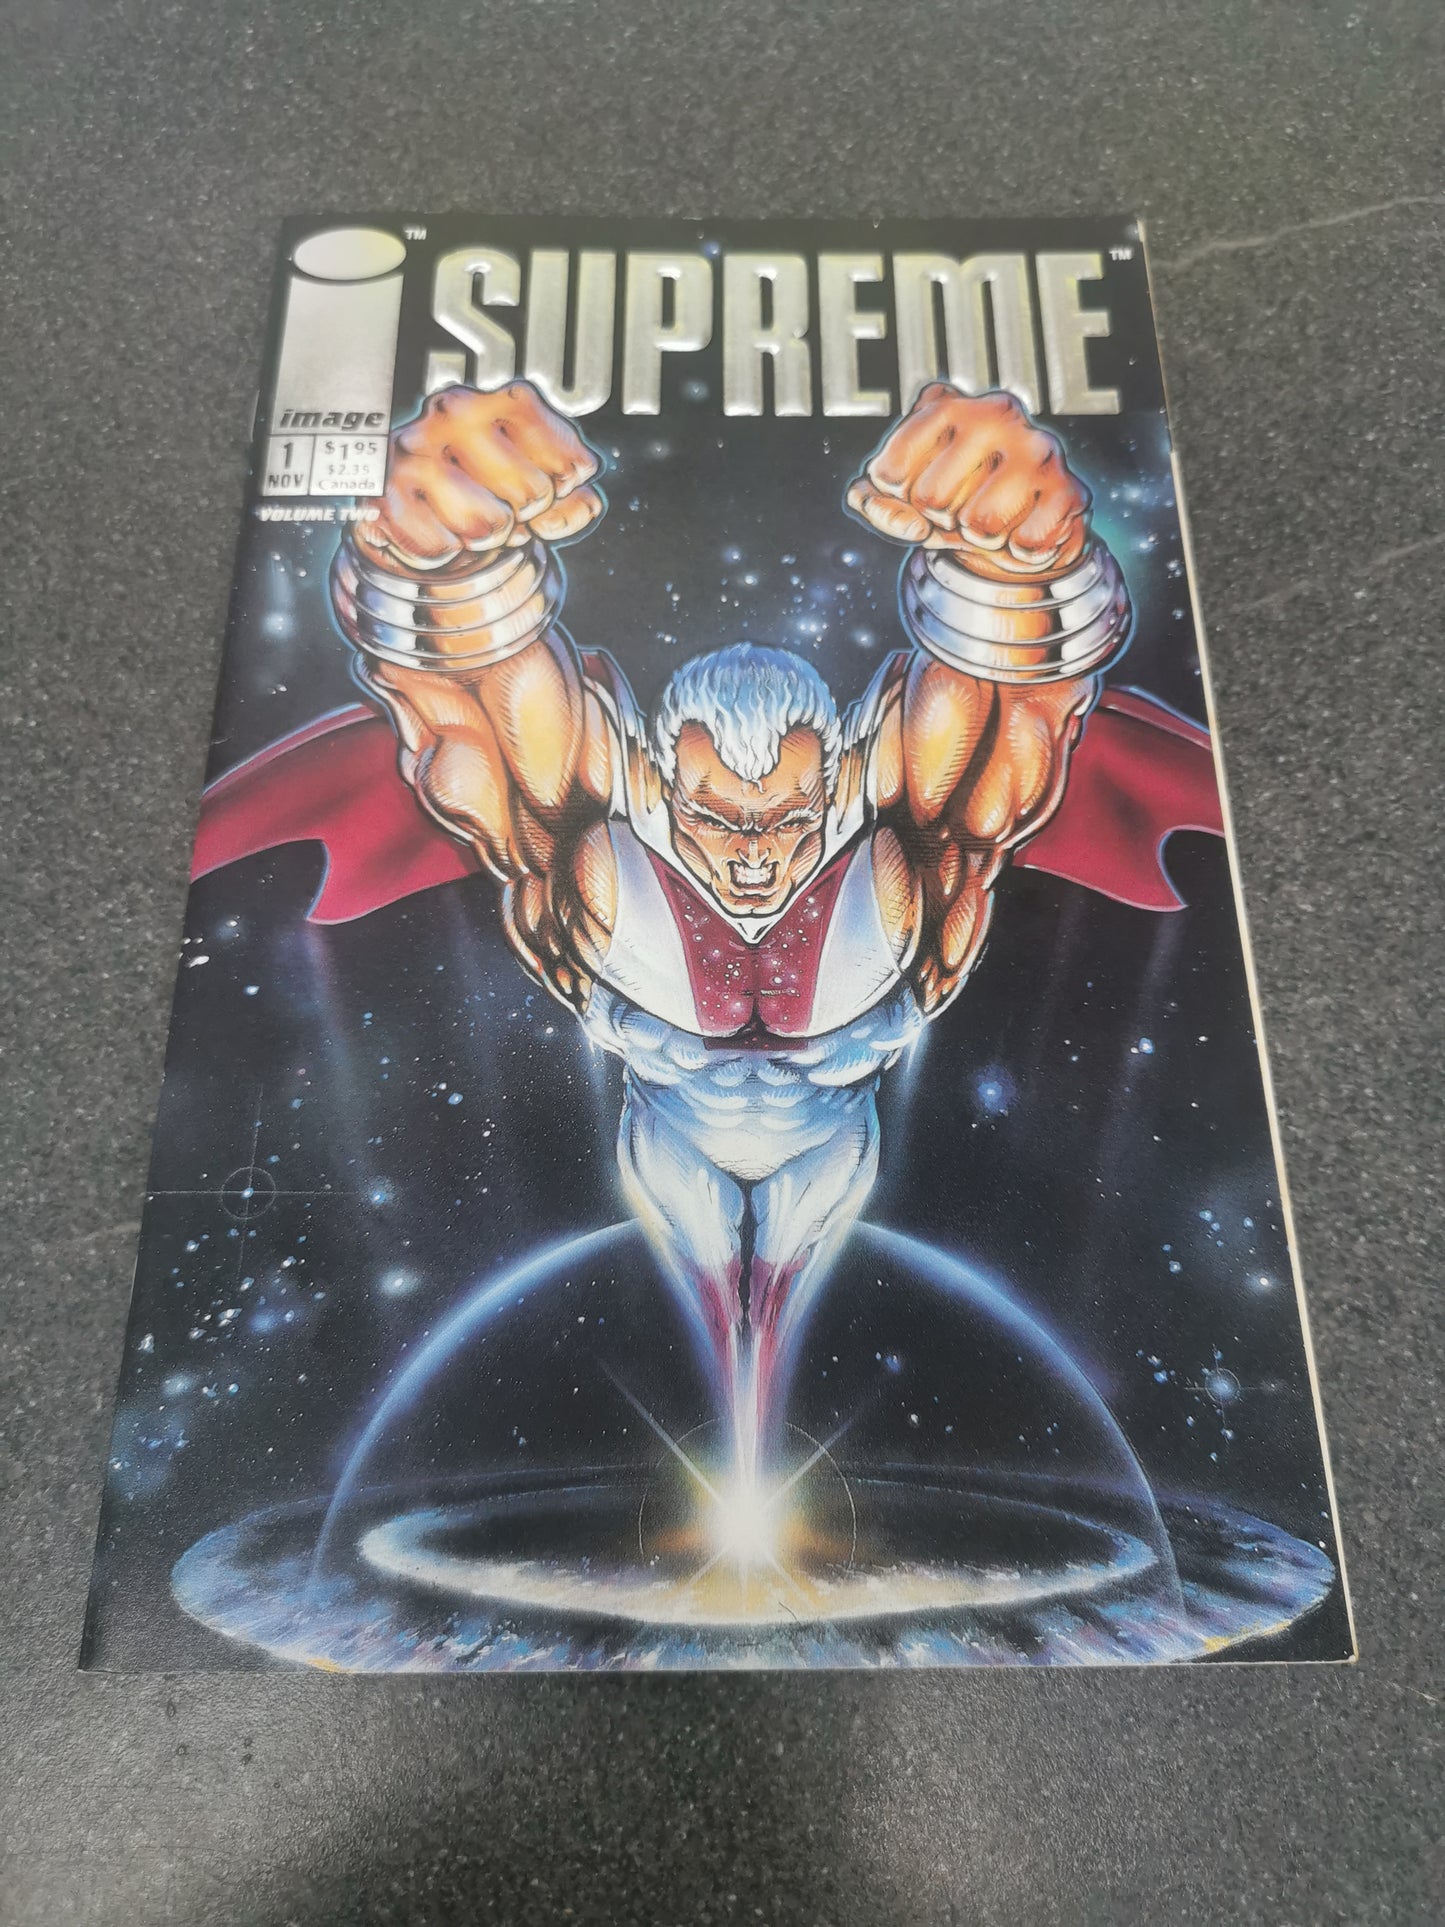 Supreme #1 1992 silver foil logo Image comics